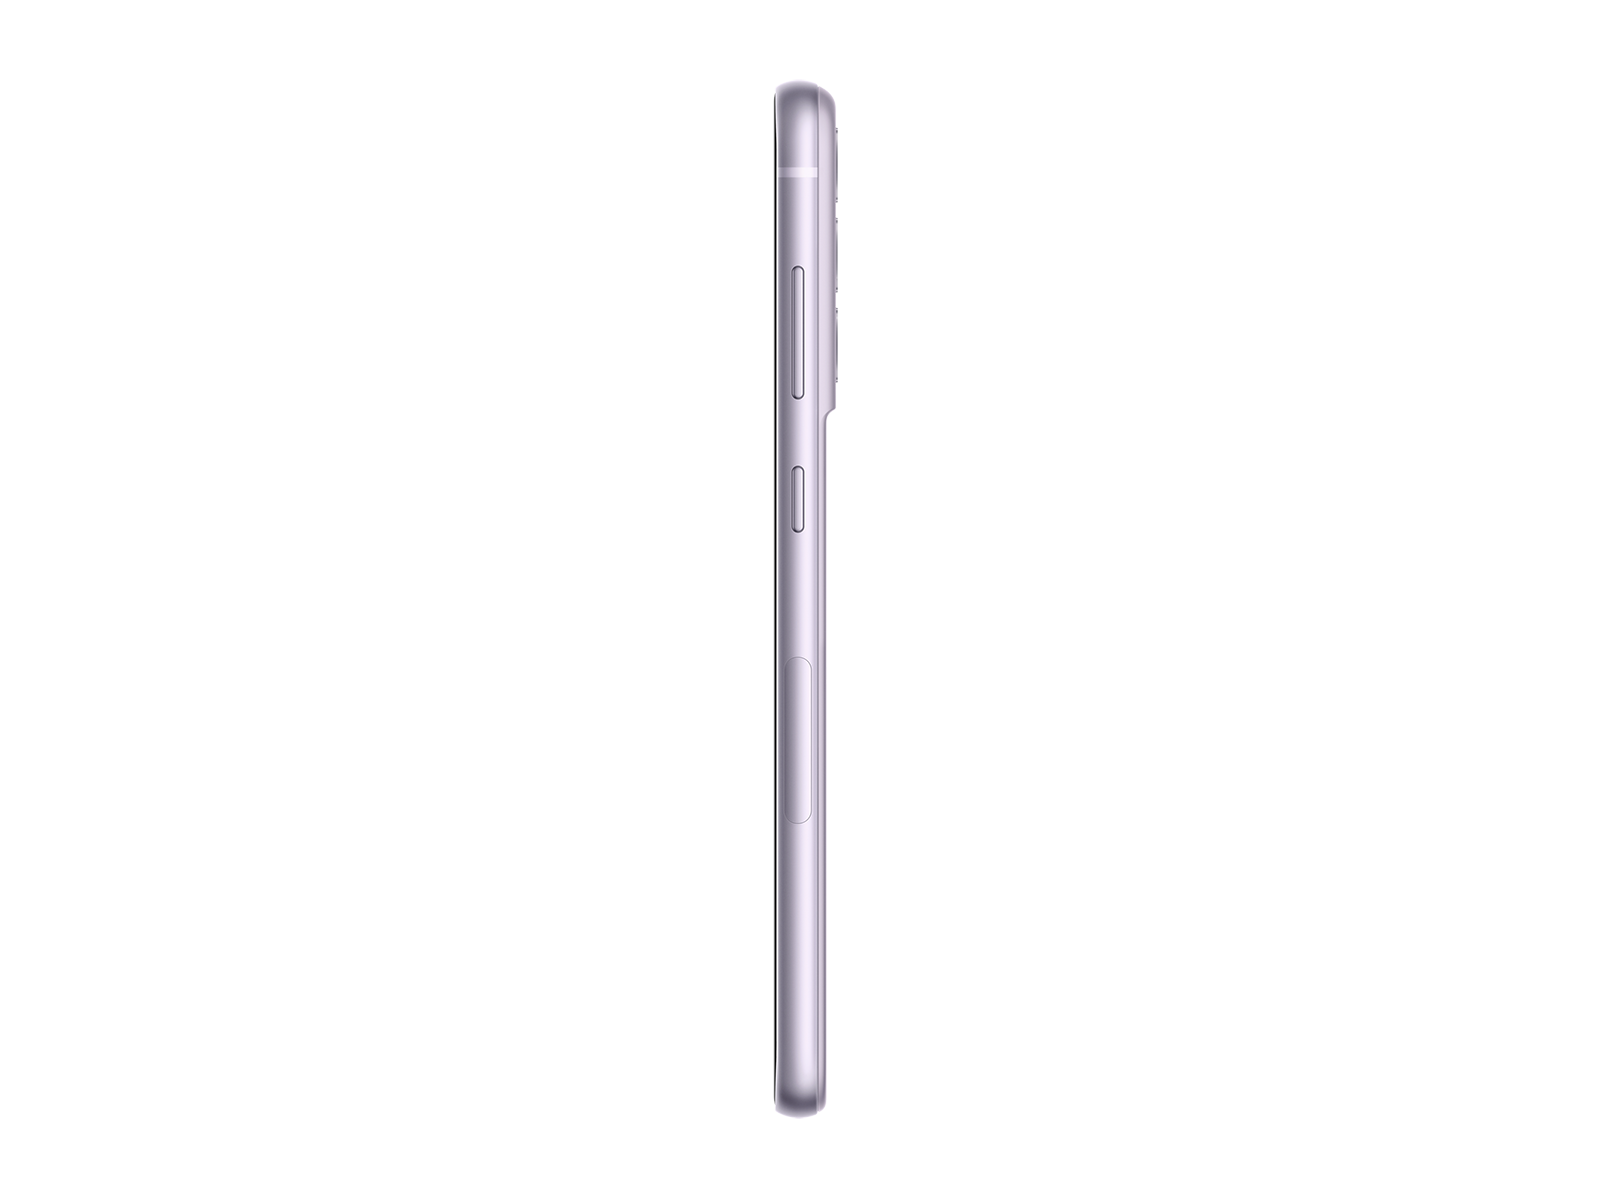  SAMSUNG Galaxy S21 FE 5G SM-G990U 256GB Factory Unlocked  Smartphone Lavender (Renewed) : Cell Phones & Accessories